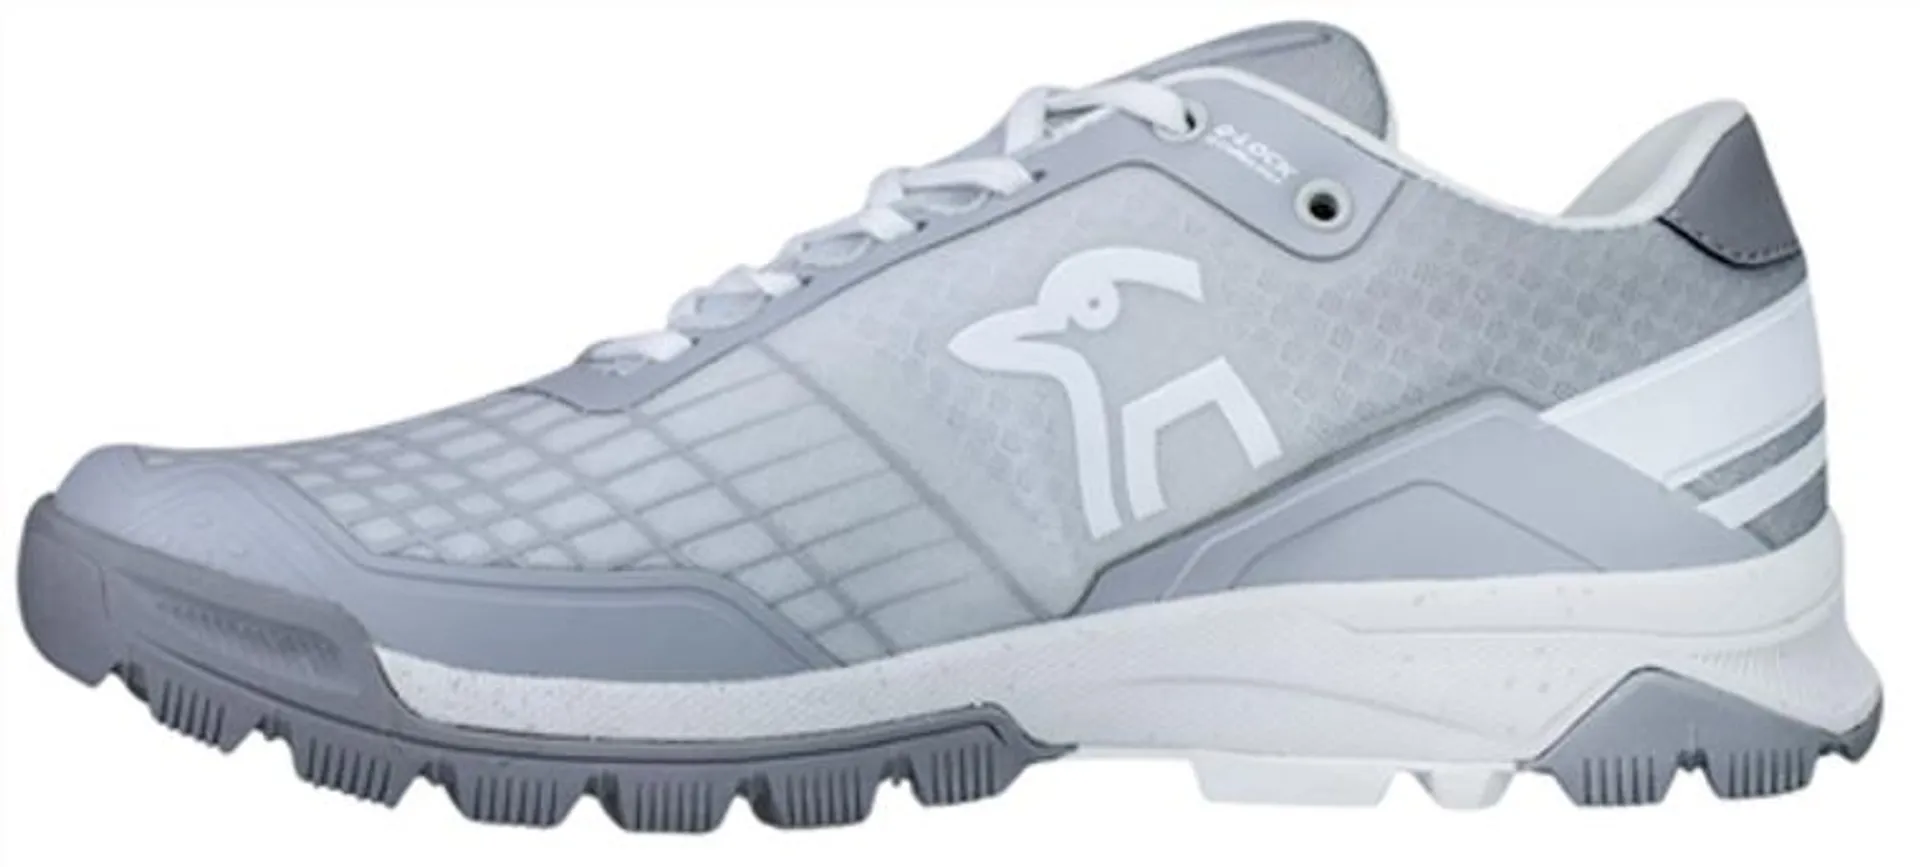 Kookaburra Unisex Vex Turf Shoes Grey